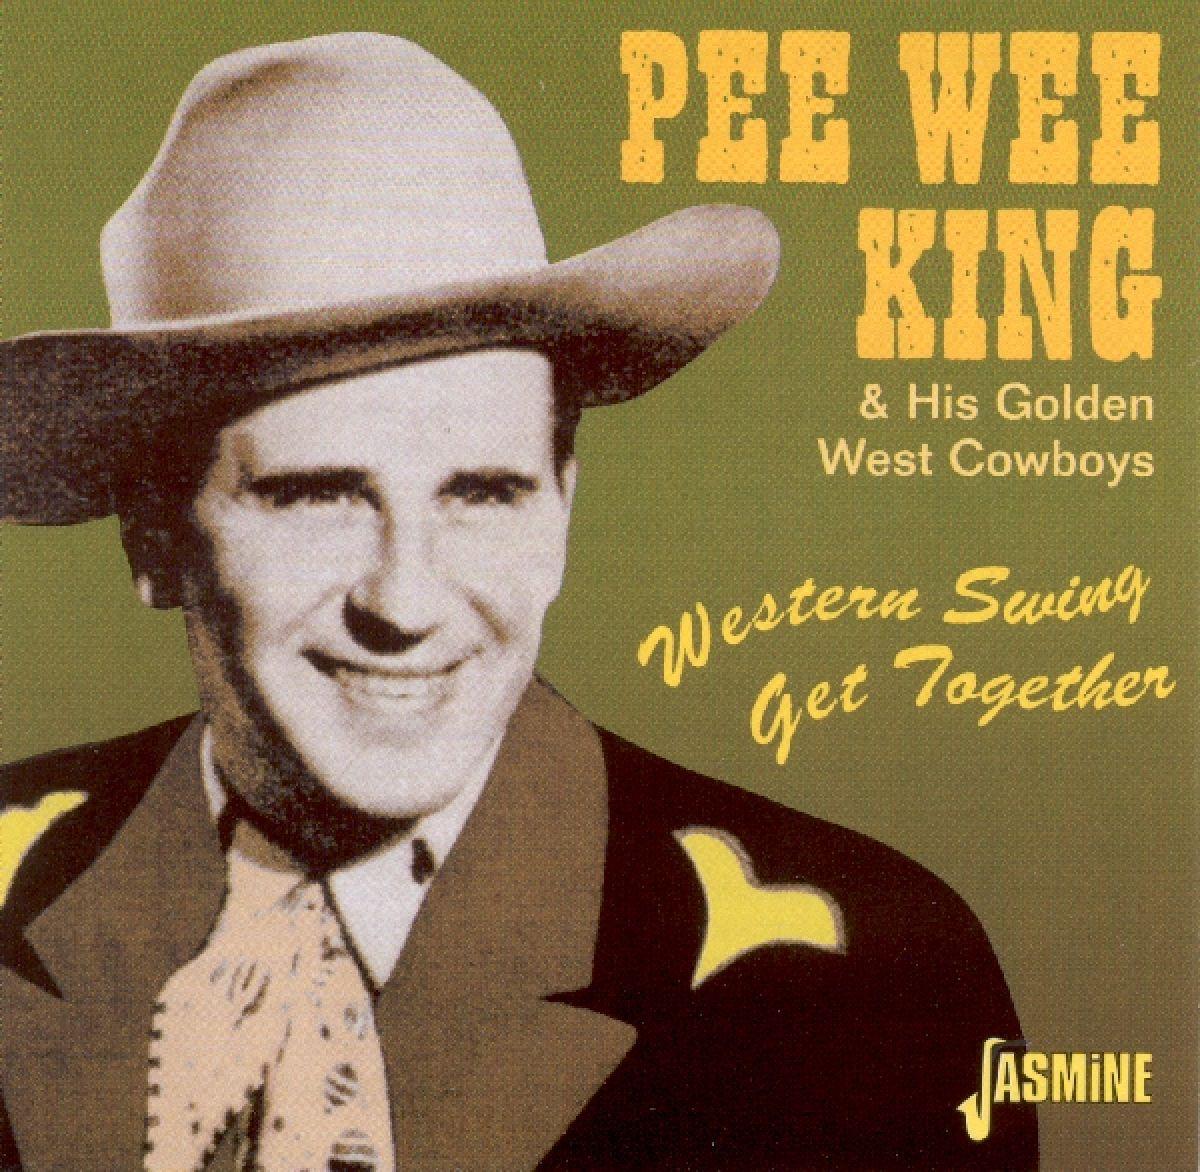 best of Pee wee Cowboy golden west his king